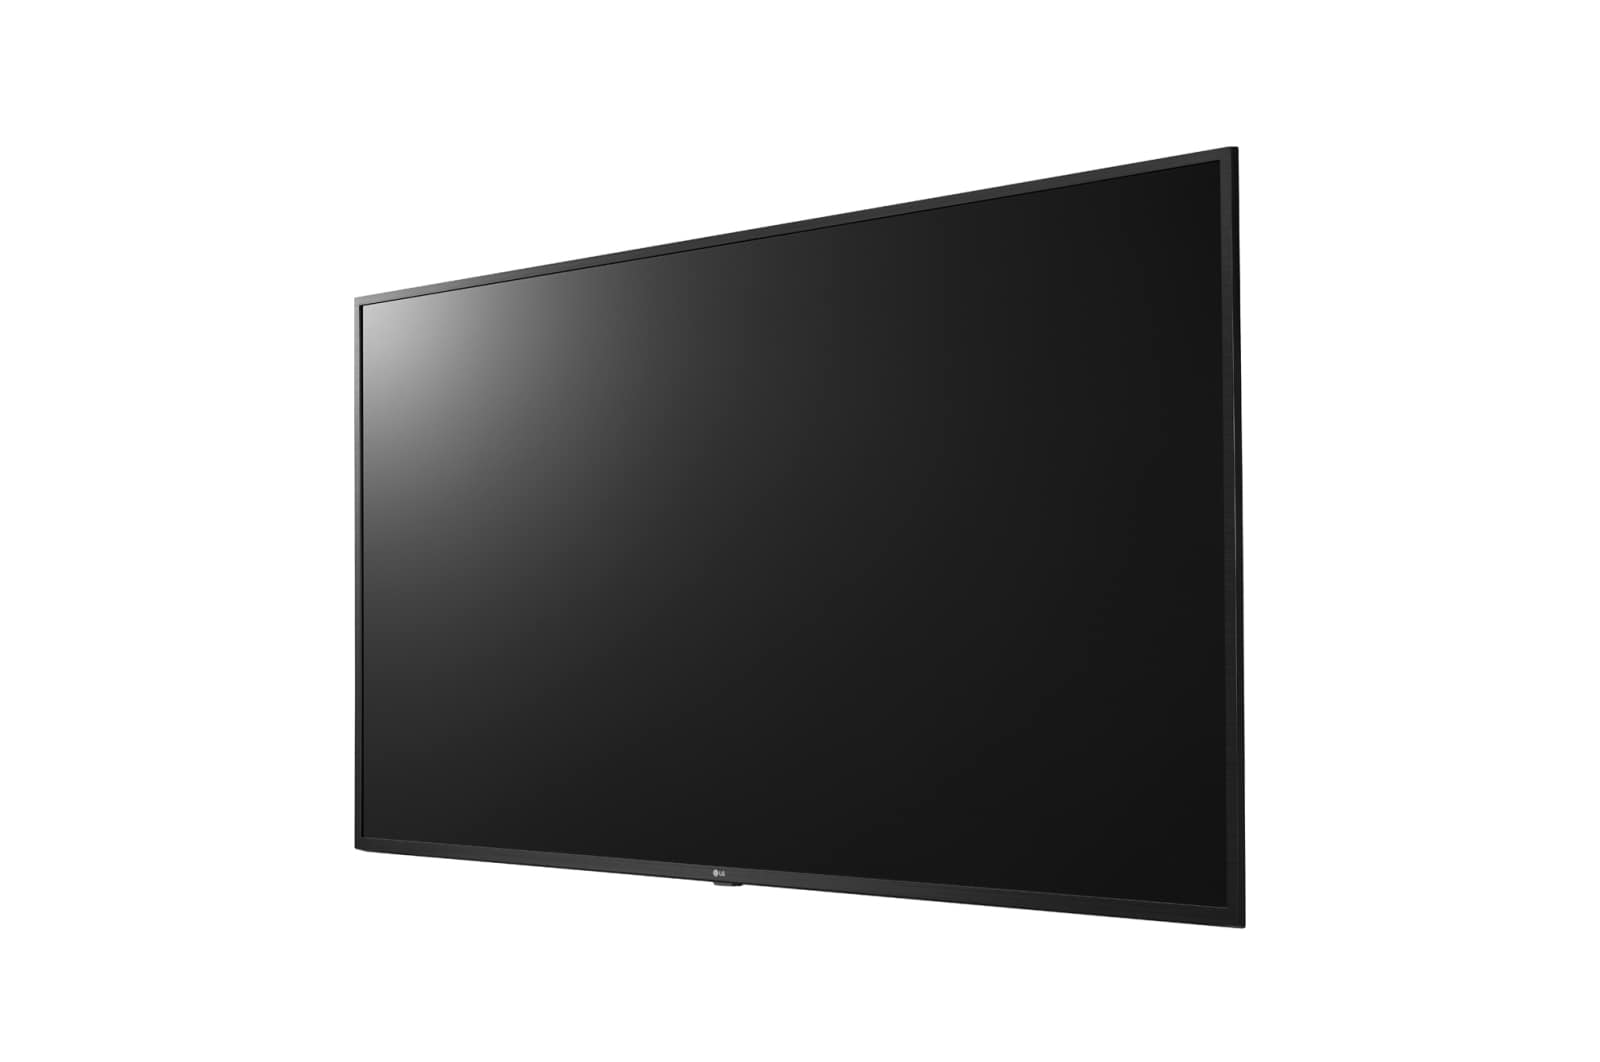 LG 55US340C US340C Series - 55" LED-backlit LCD TV - 4K